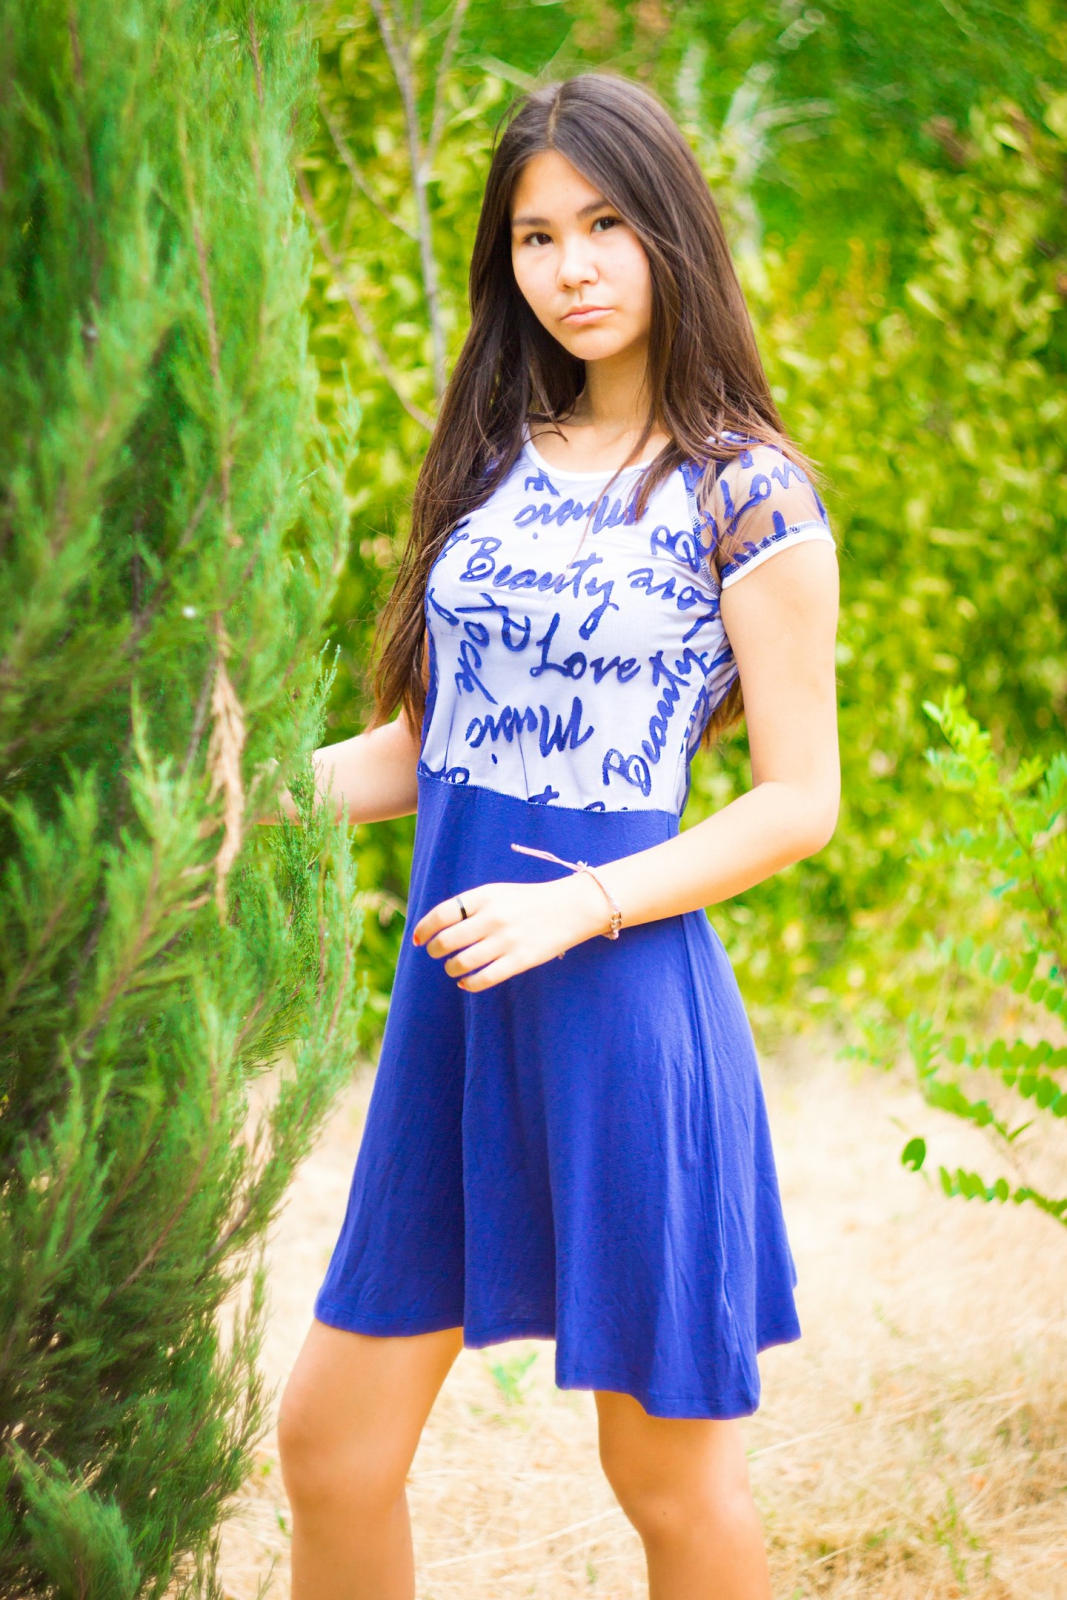 Лето 15 16. Арианна Алиева. Девушка 15 лет. Красивые девушки 14-15 лет.